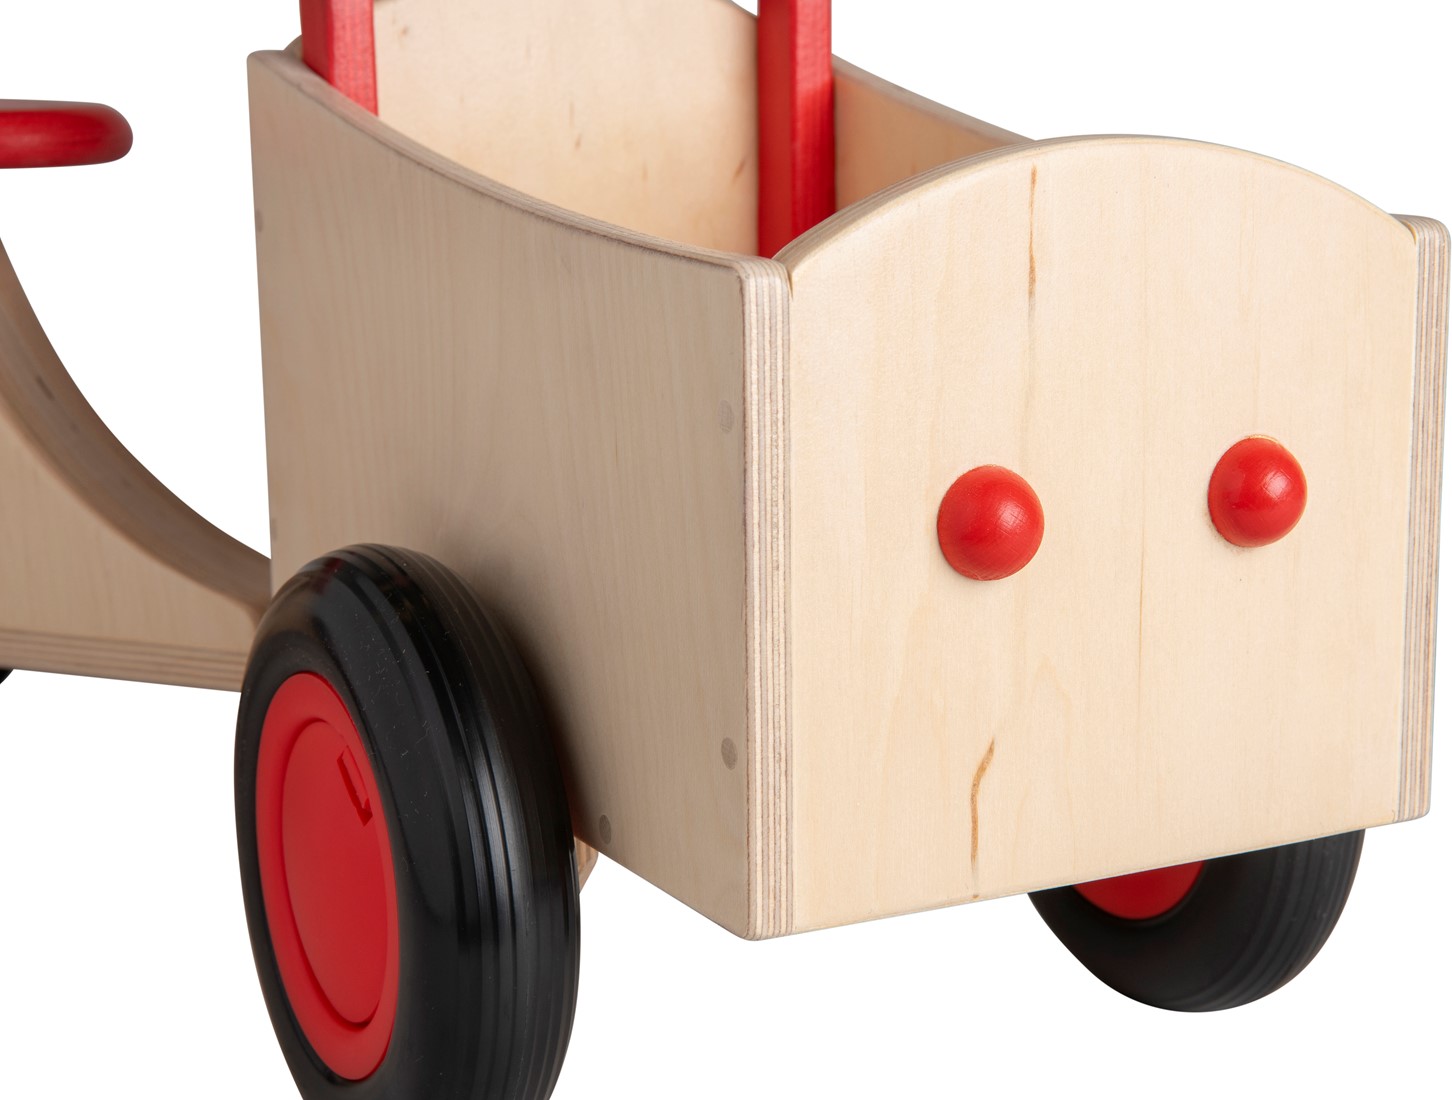 Bekritiseren veiligheid Strak Van Dijk Toys houten kinder loop bakfiets vanaf 1 jaar - Rood (Kinderopvang  kwaliteit)